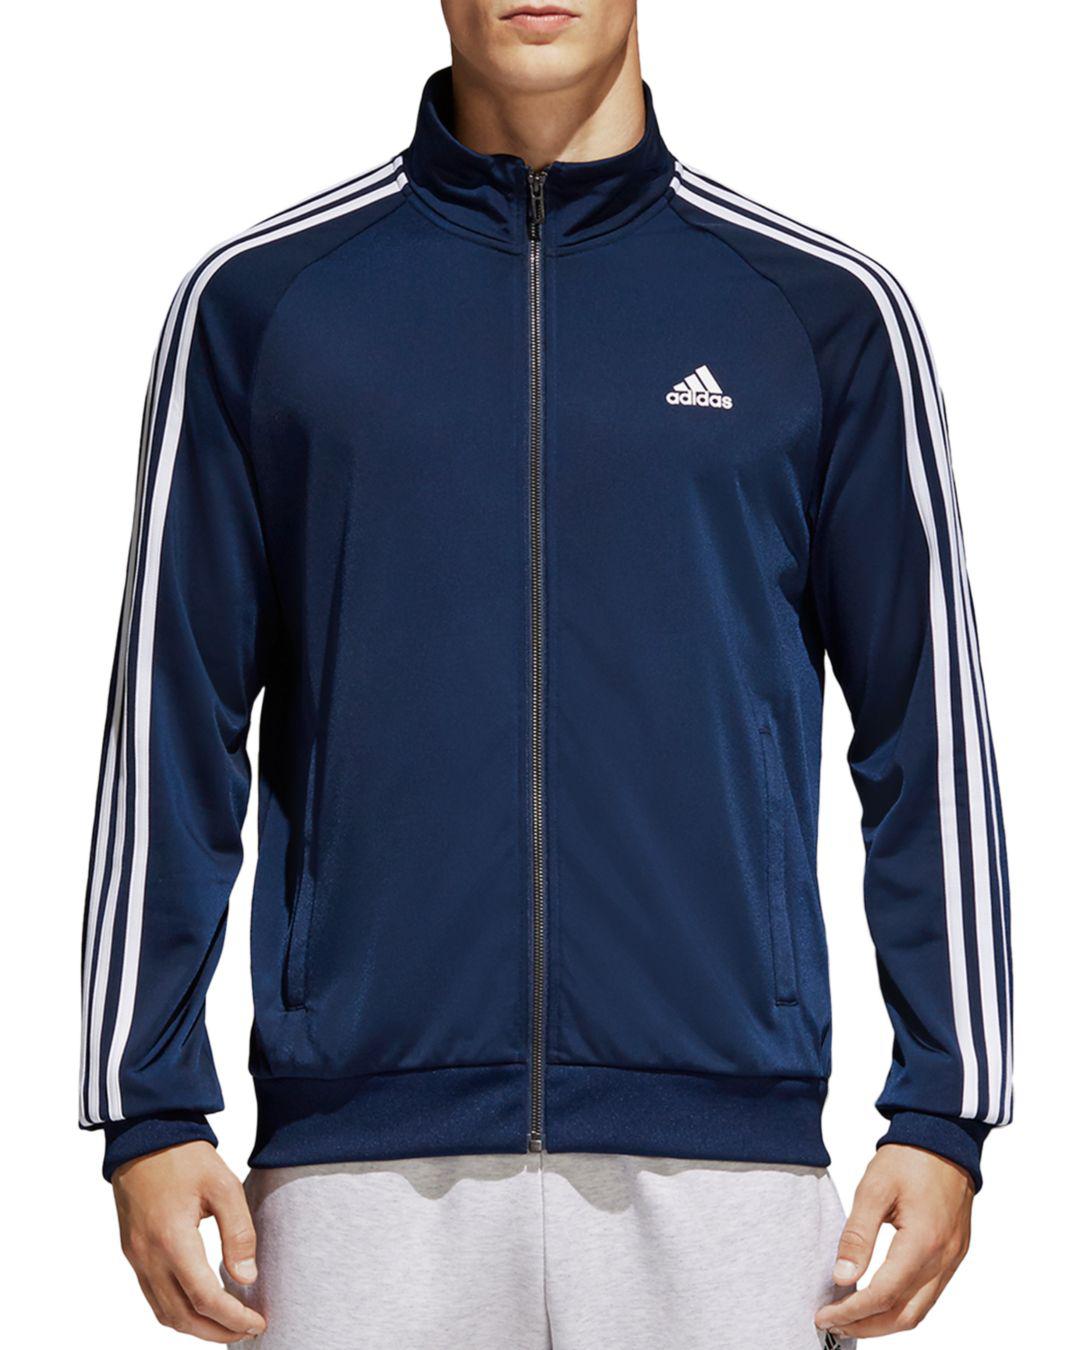 adidas Originals Three - Stripe Track Jacket in Blue for Men - Lyst